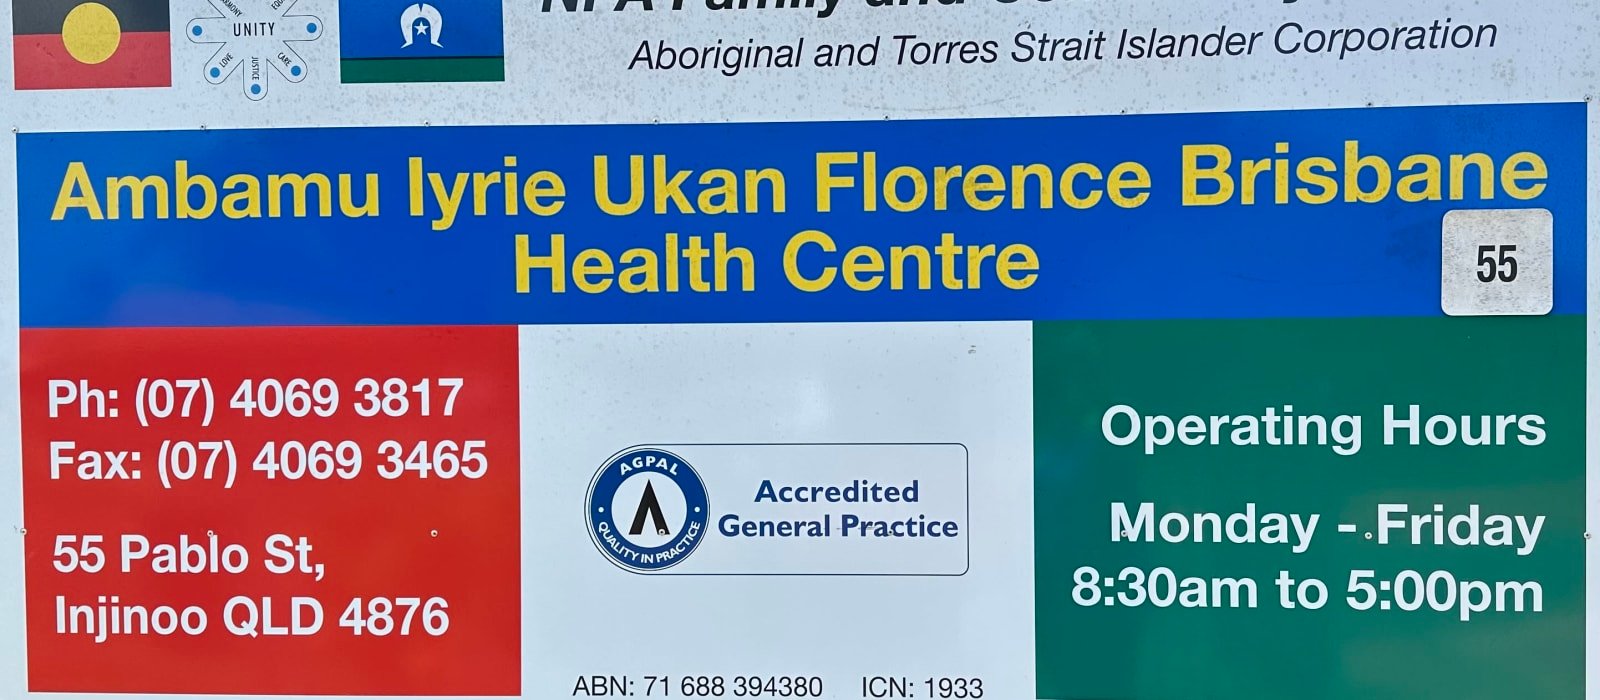 Ambamu Iyrie Ukan Florence Brisbane Health Centre Injinoo